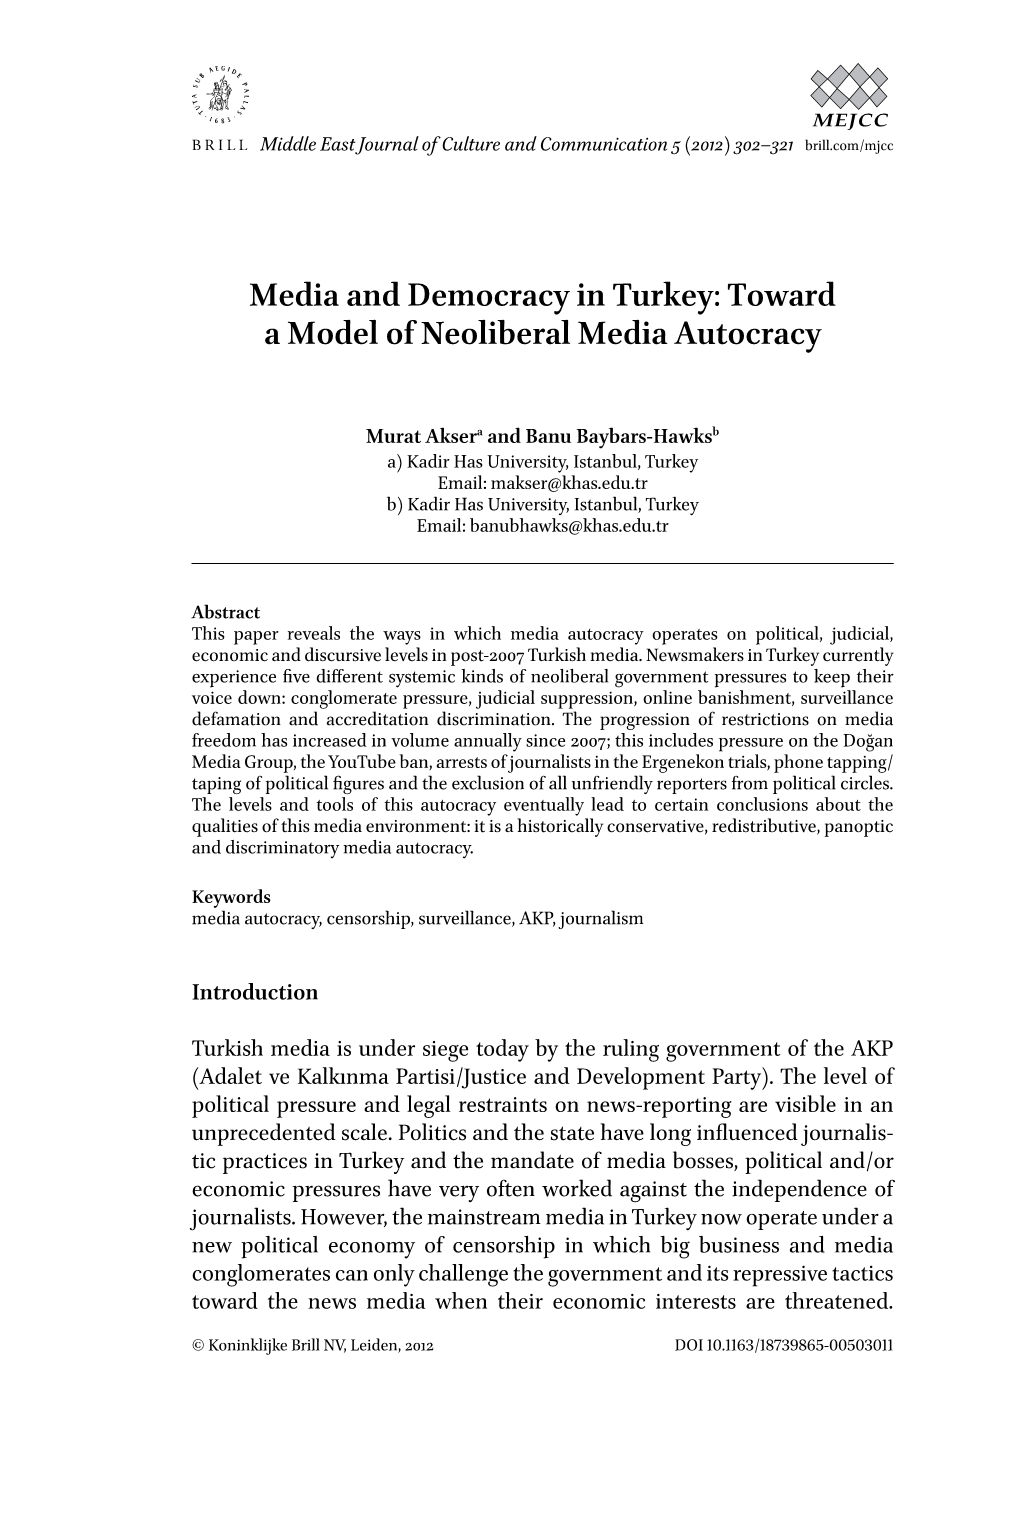 Media and Democracy in Turkey: Toward a Model of Neoliberal Media Autocracy